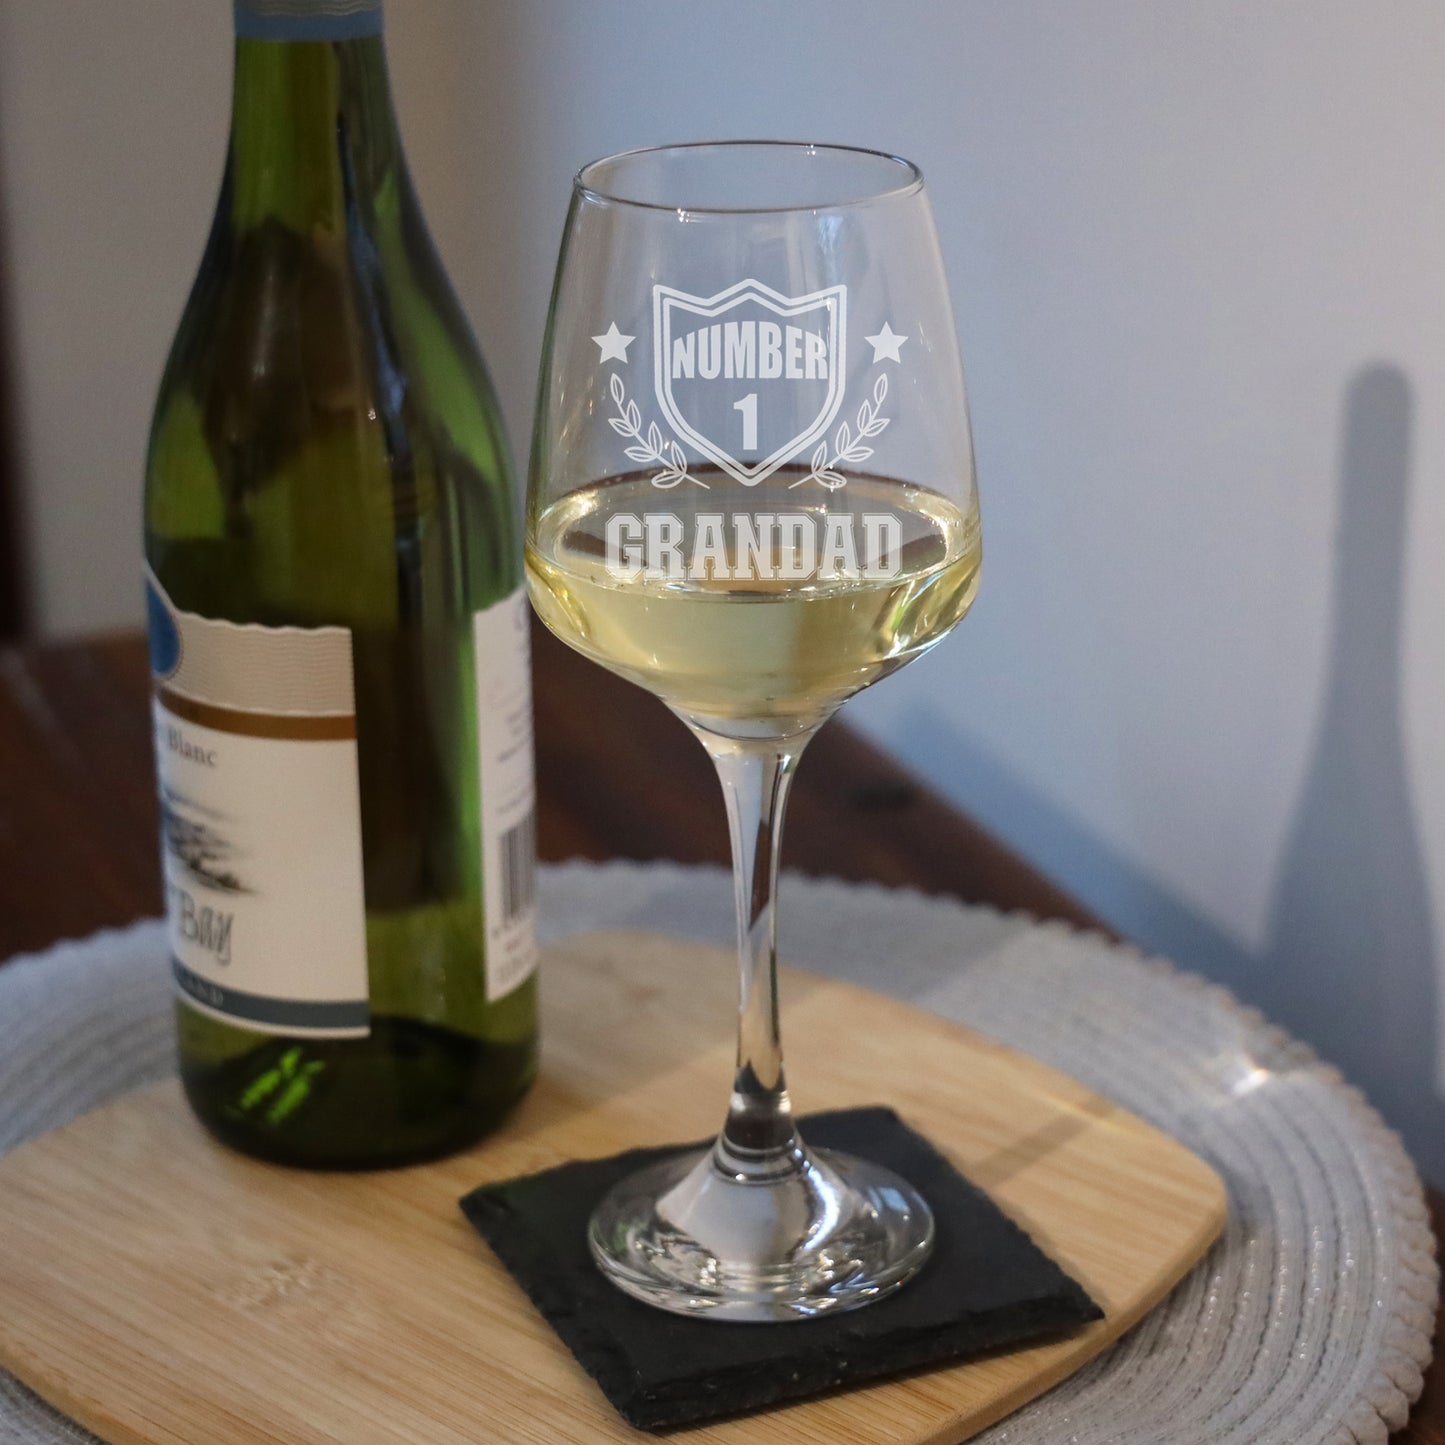 Engraved "Number 1 Grandad" Wine Glass and/or Coaster Set  - Always Looking Good -   